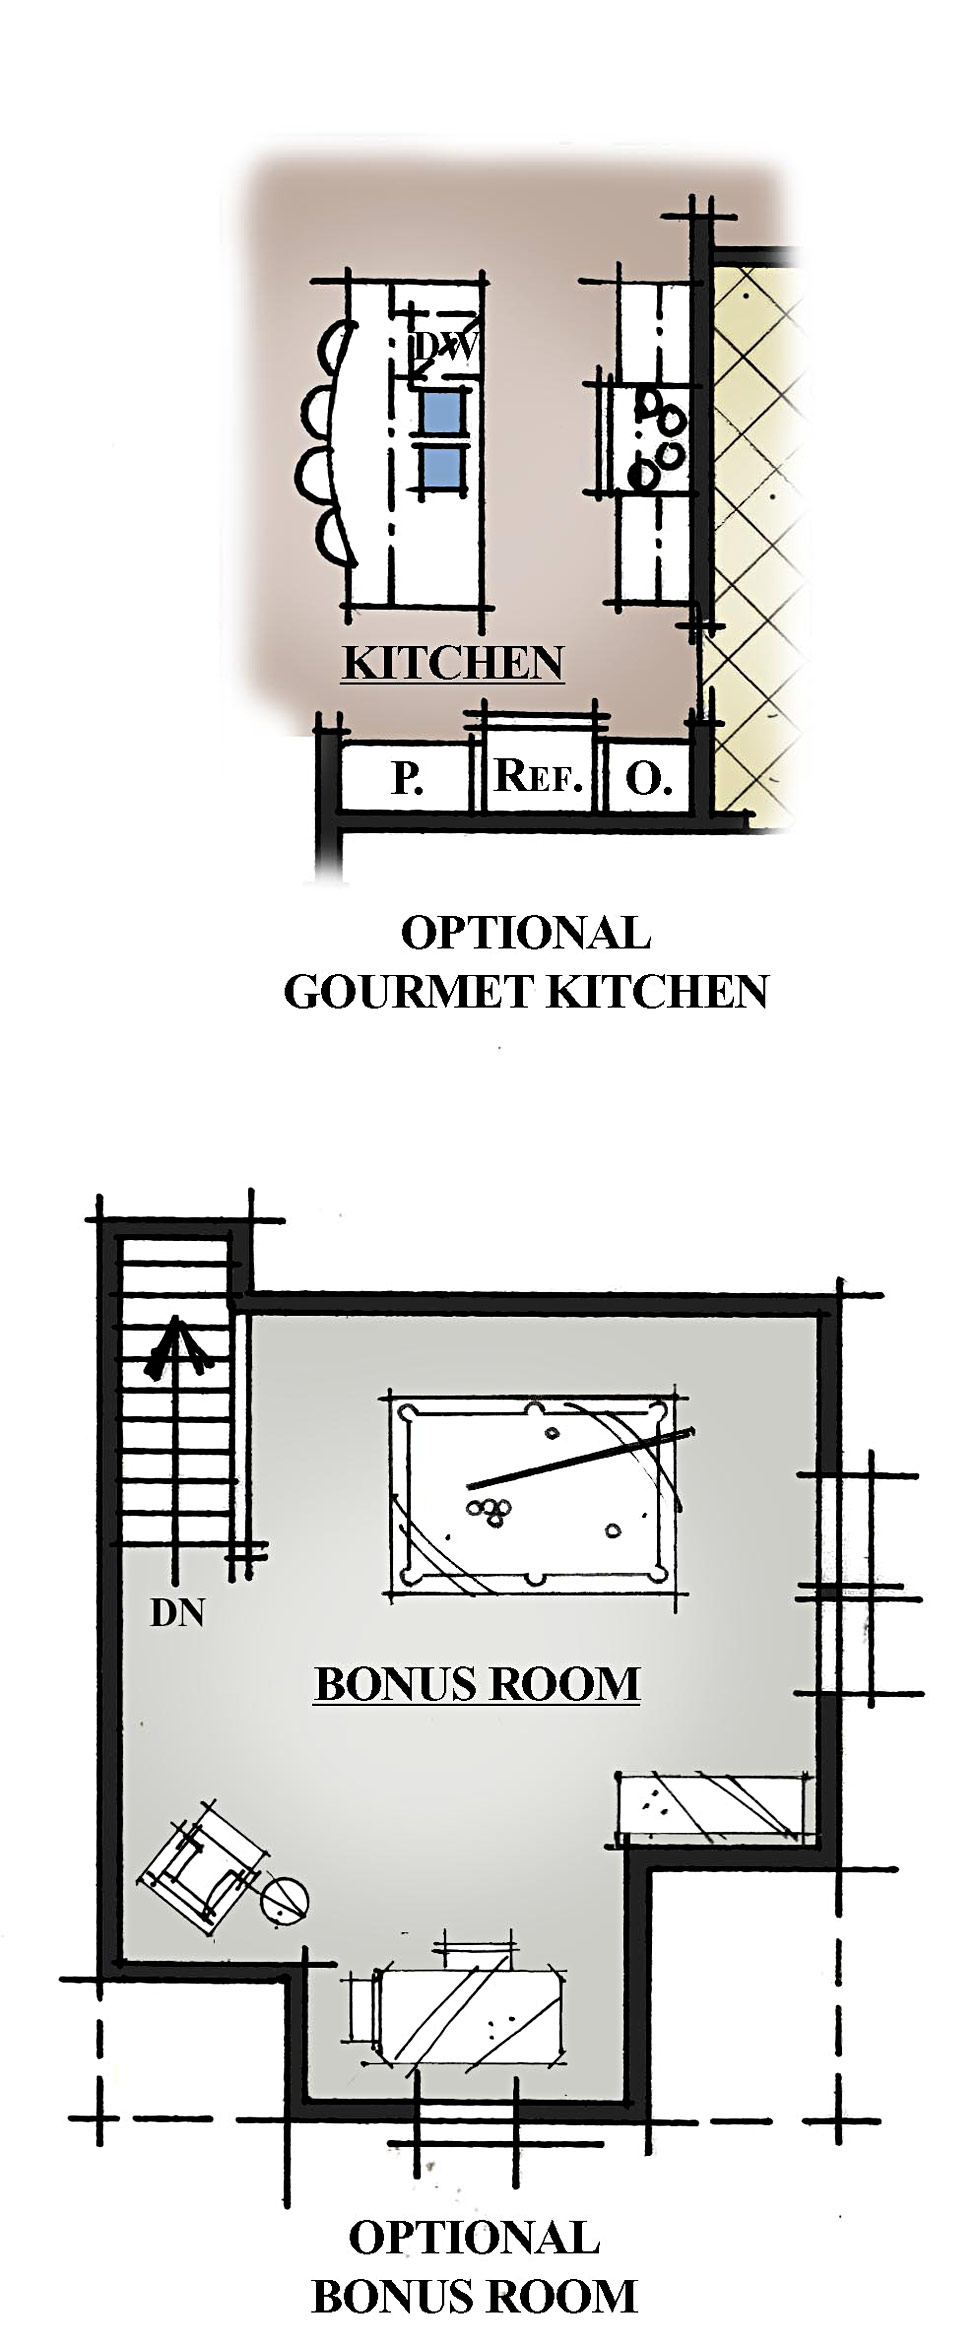 model e optional gourmet kitchen